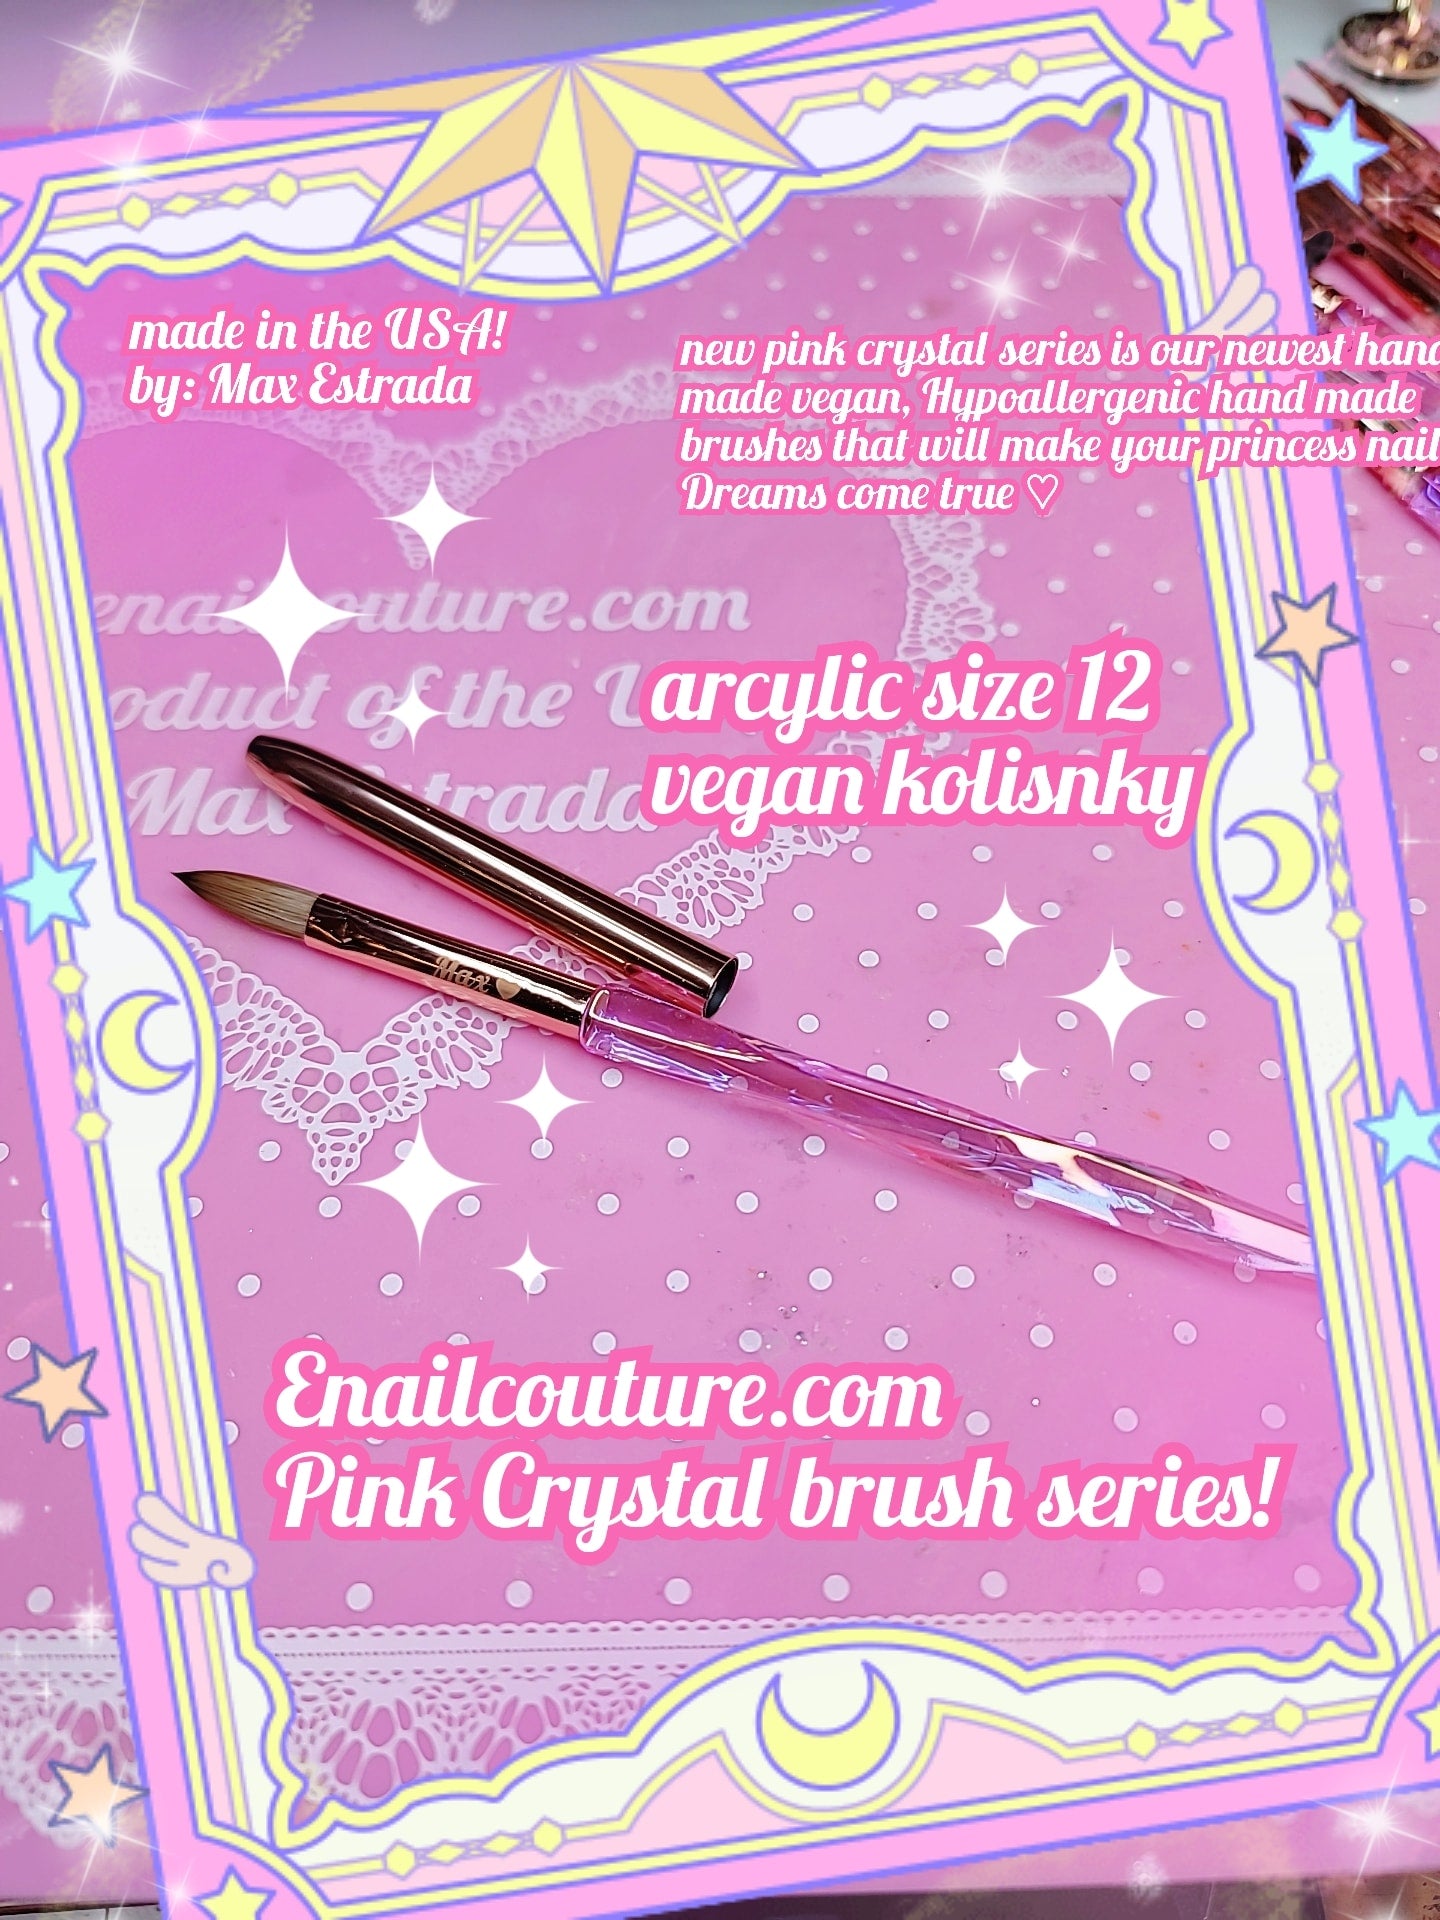 Pink Crystal art brush set (1 of each brush, 7 total)